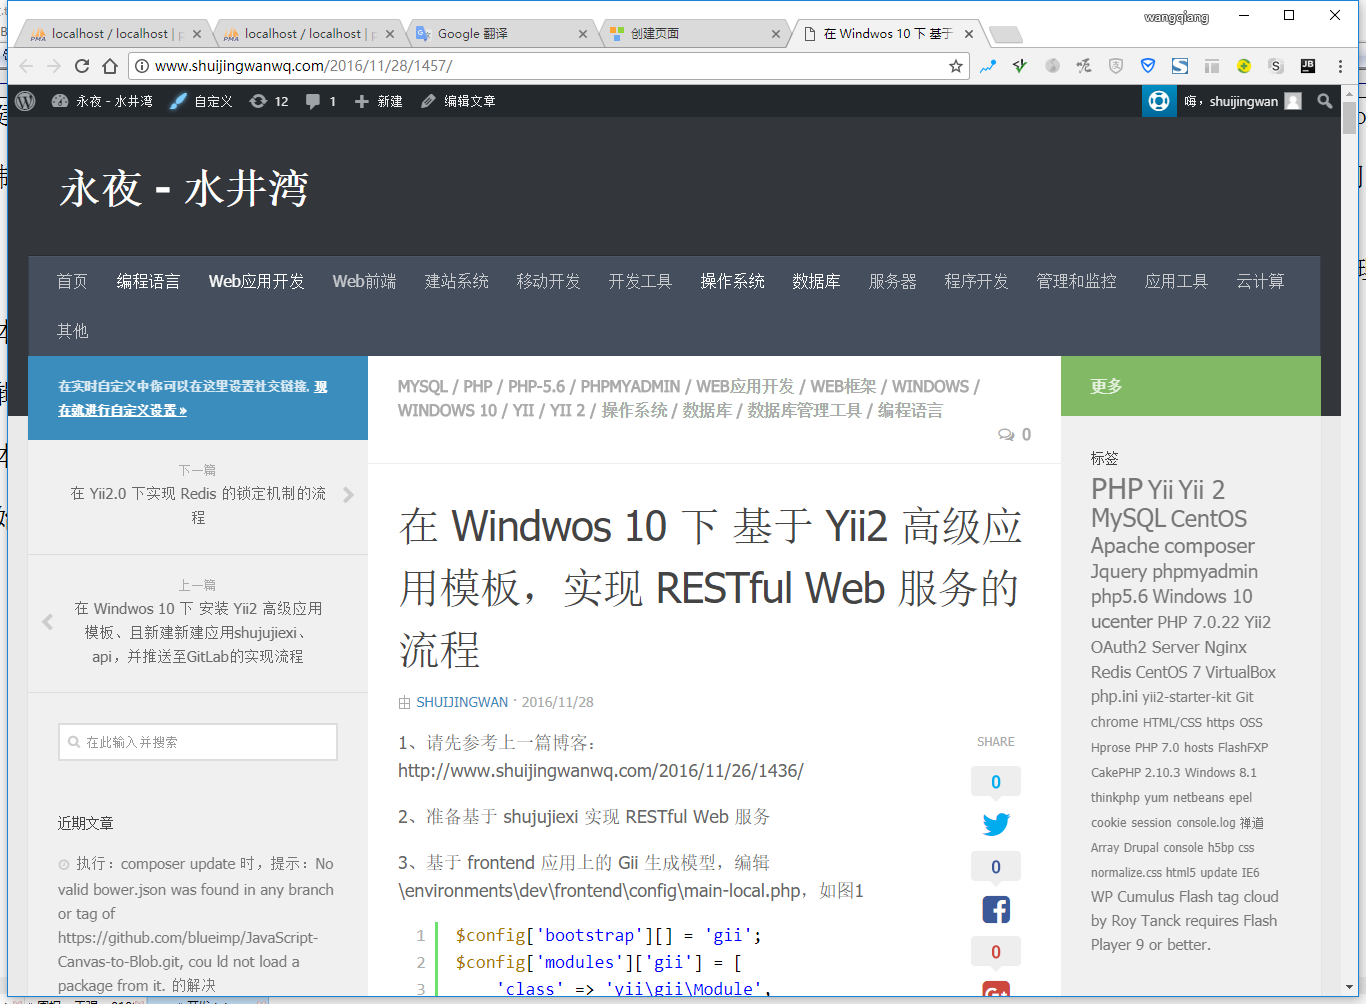 开始实现 RESTful Web 服务，参考网址：http://www.shuijingwanwq.com/2016/11/28/1457/